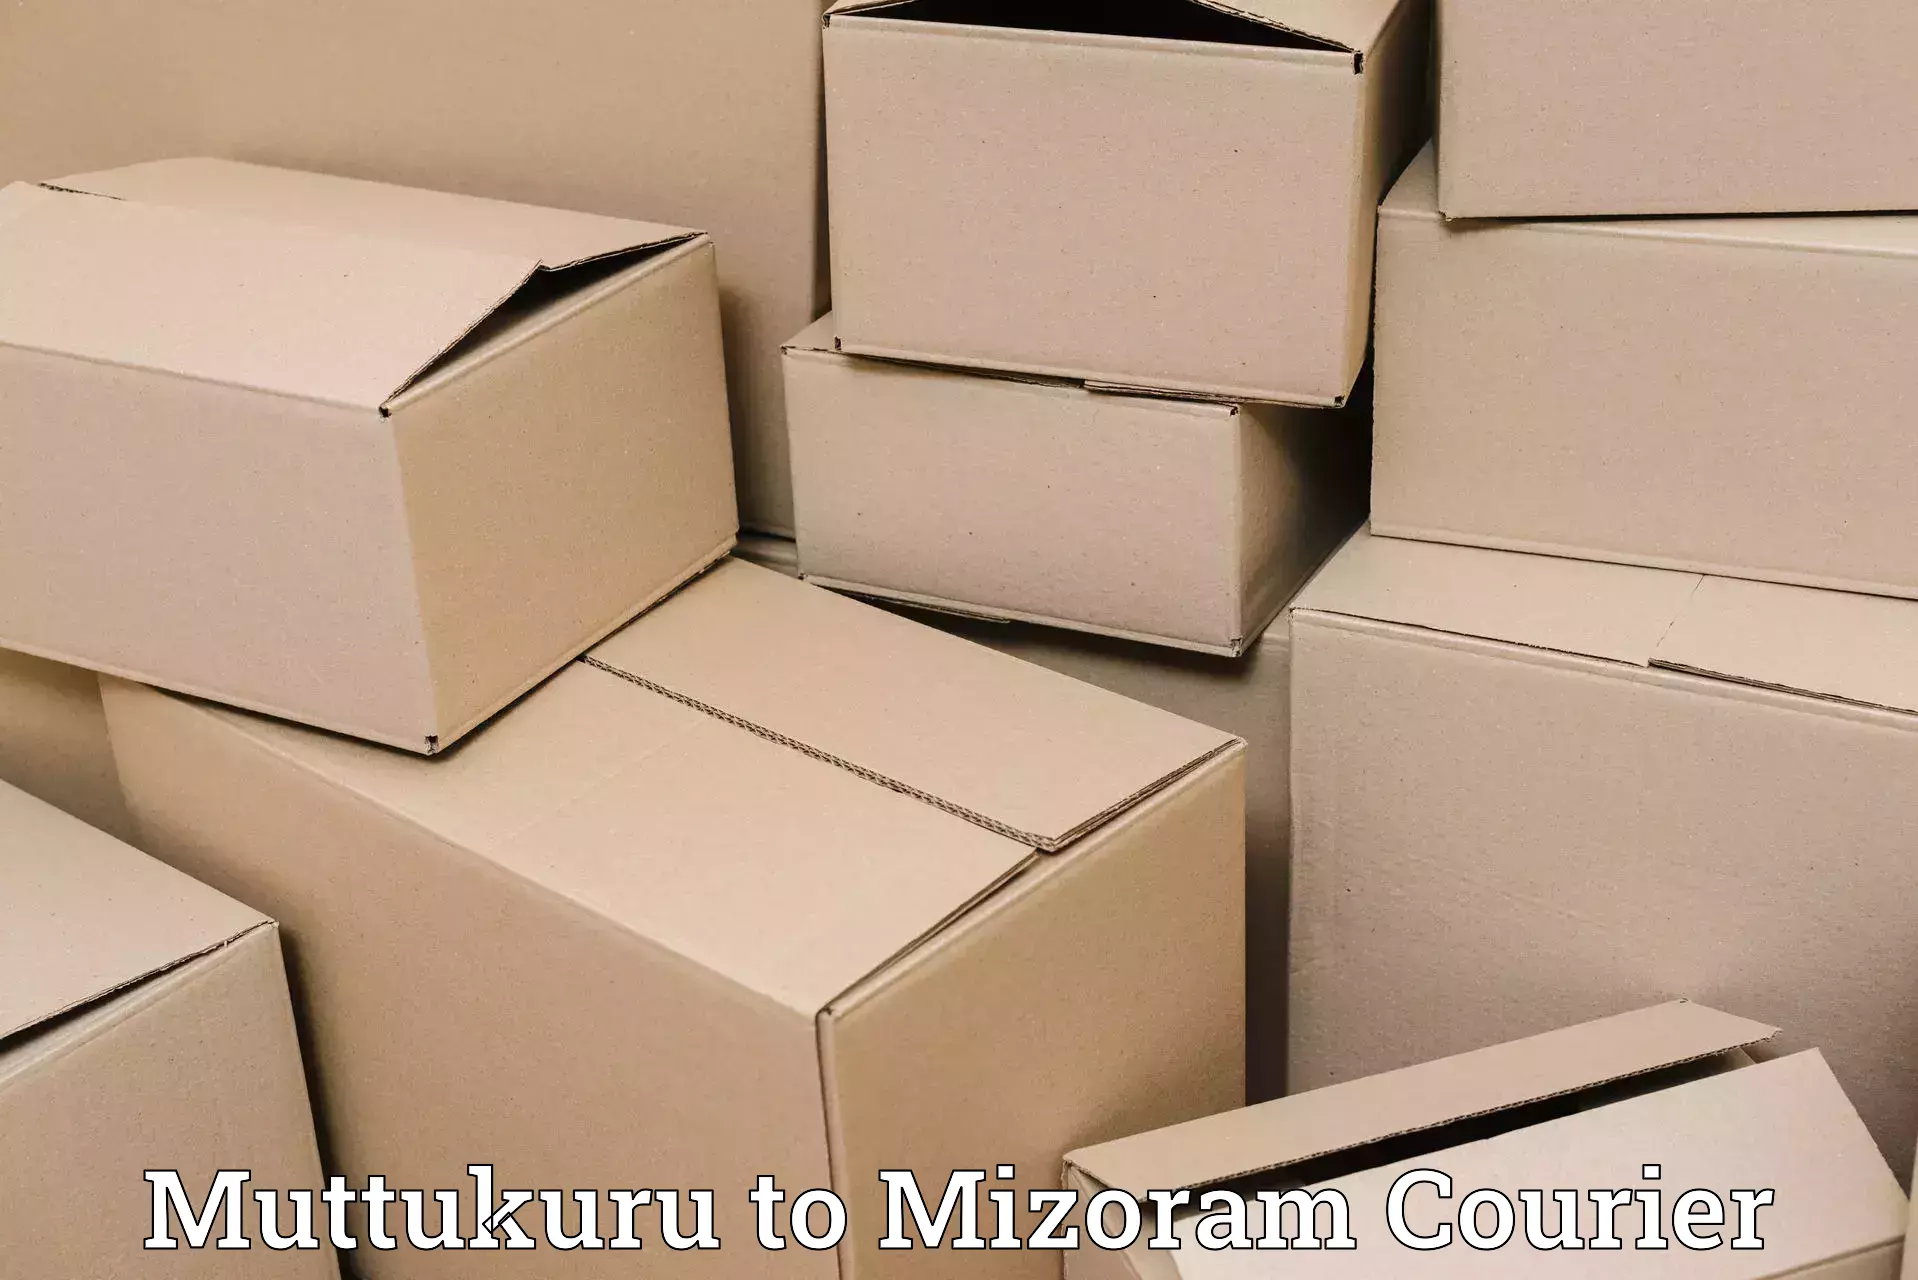 Express package delivery Muttukuru to Mizoram